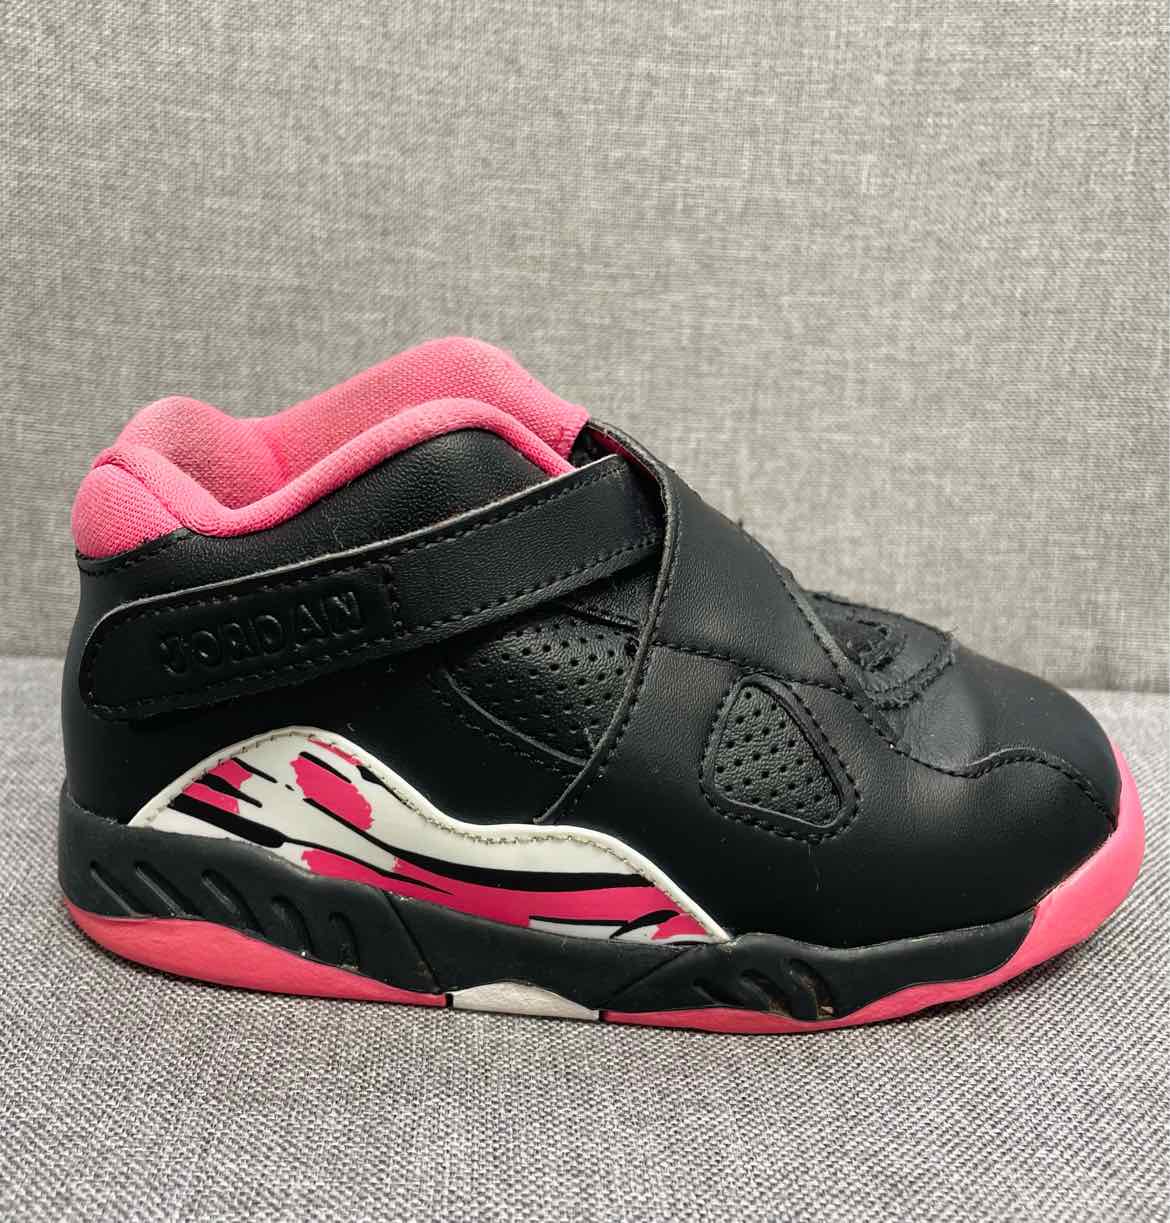 9 Jordan Shoes/Boots